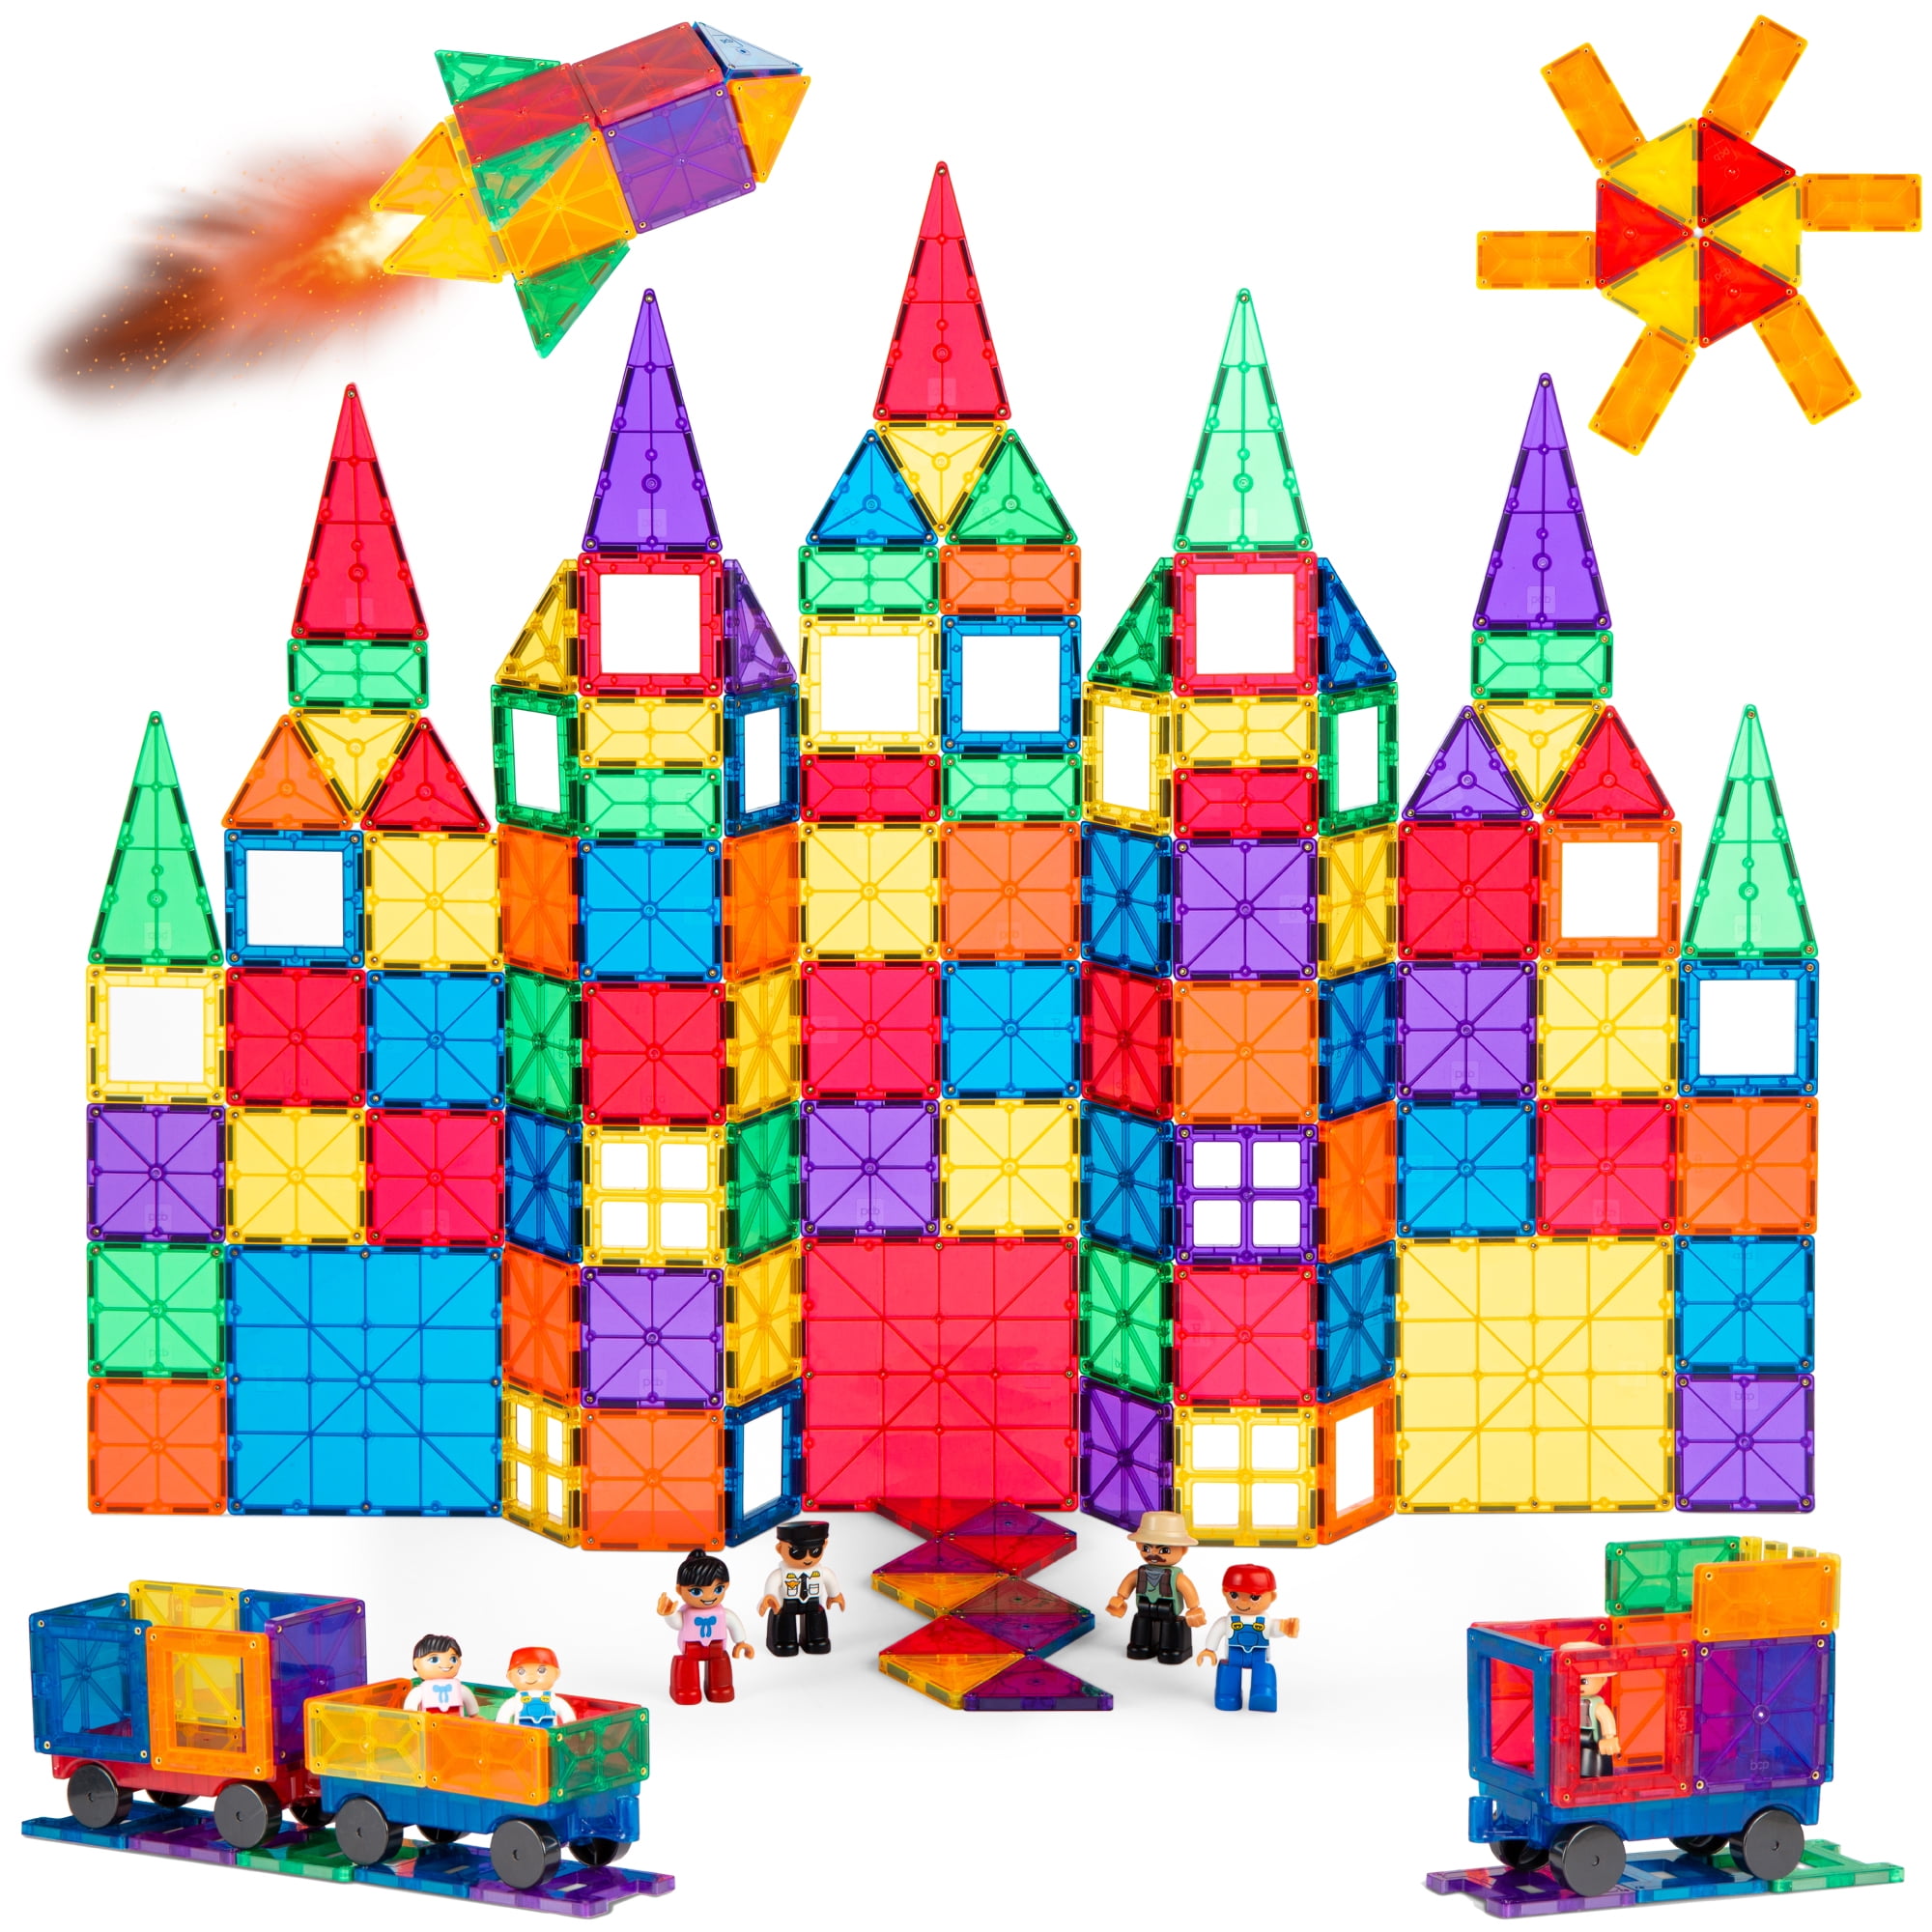 Year Old Boys and Girls Building Construction Educational STEM Toys for 3 100Pcs 3D Magnetic Building Blocks Tiles Set Kids Magnetic Tiles Toys